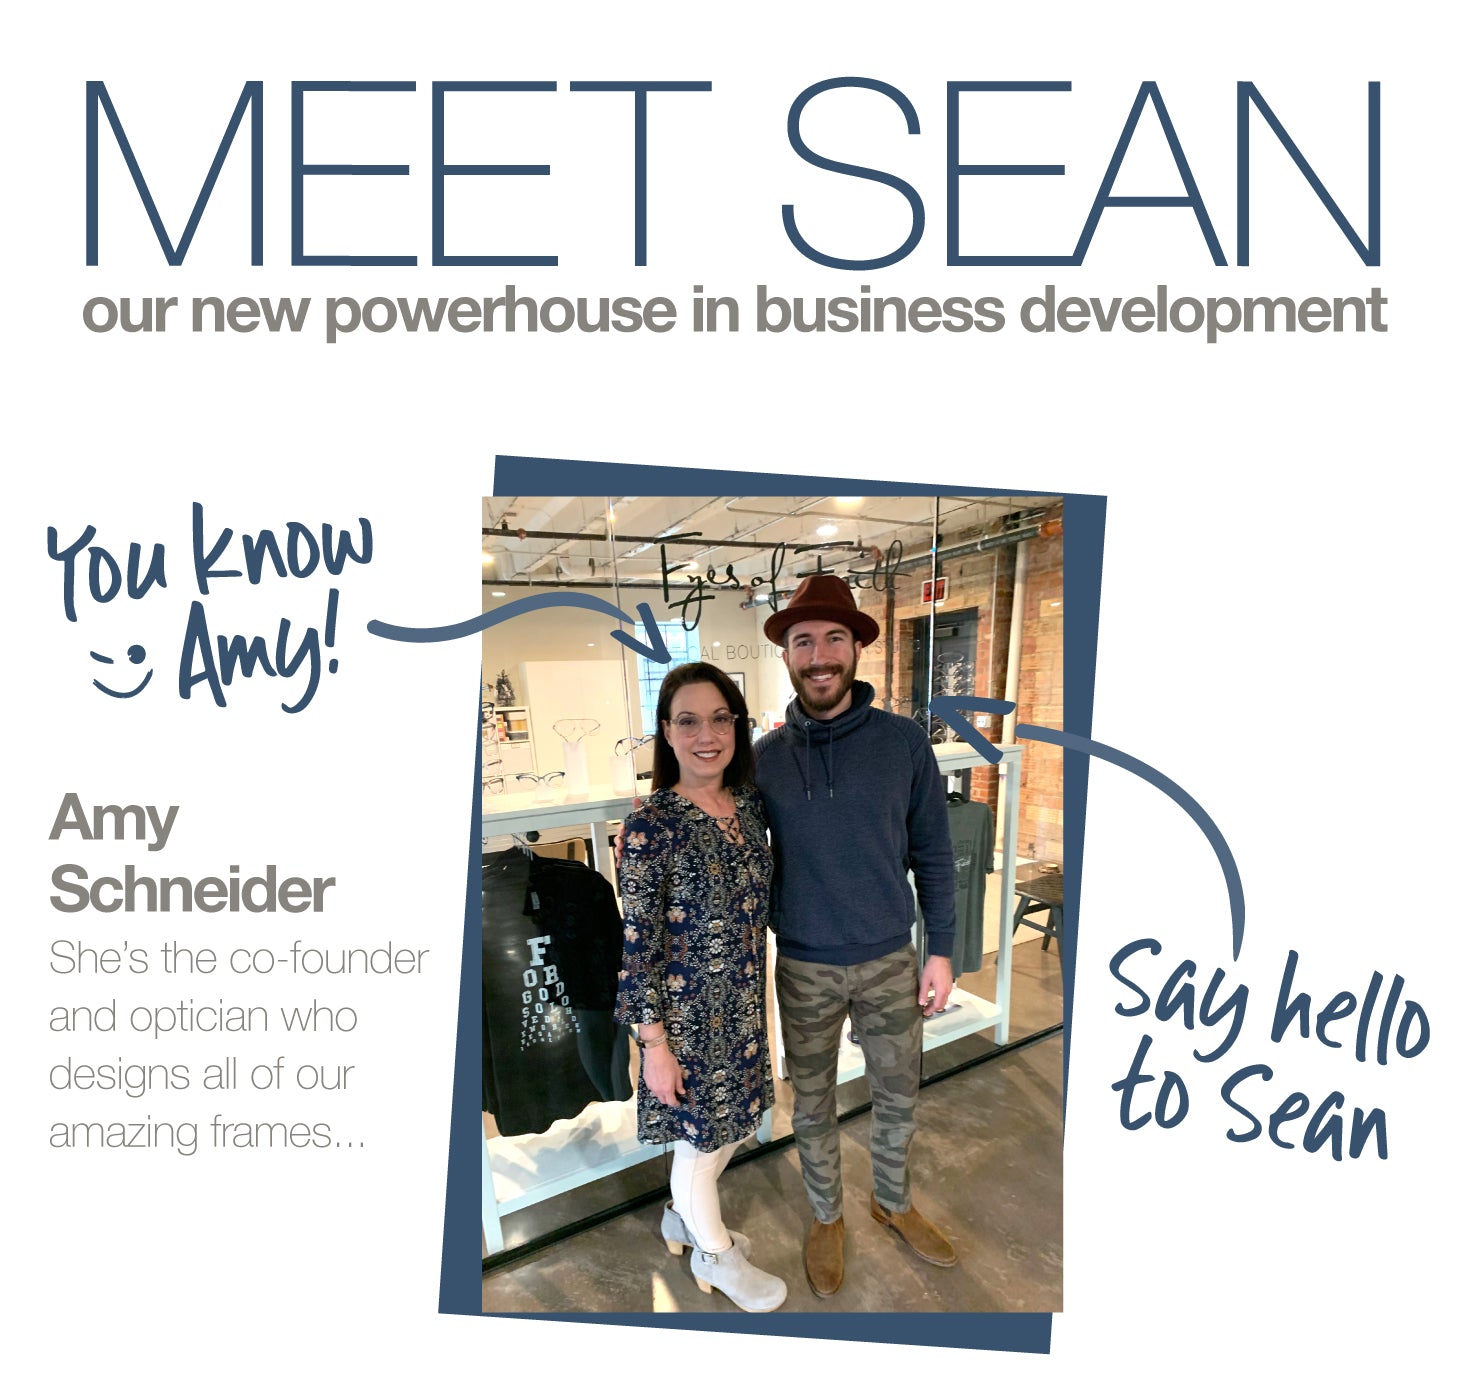 Meet Sean - Our new powerhouse in business development